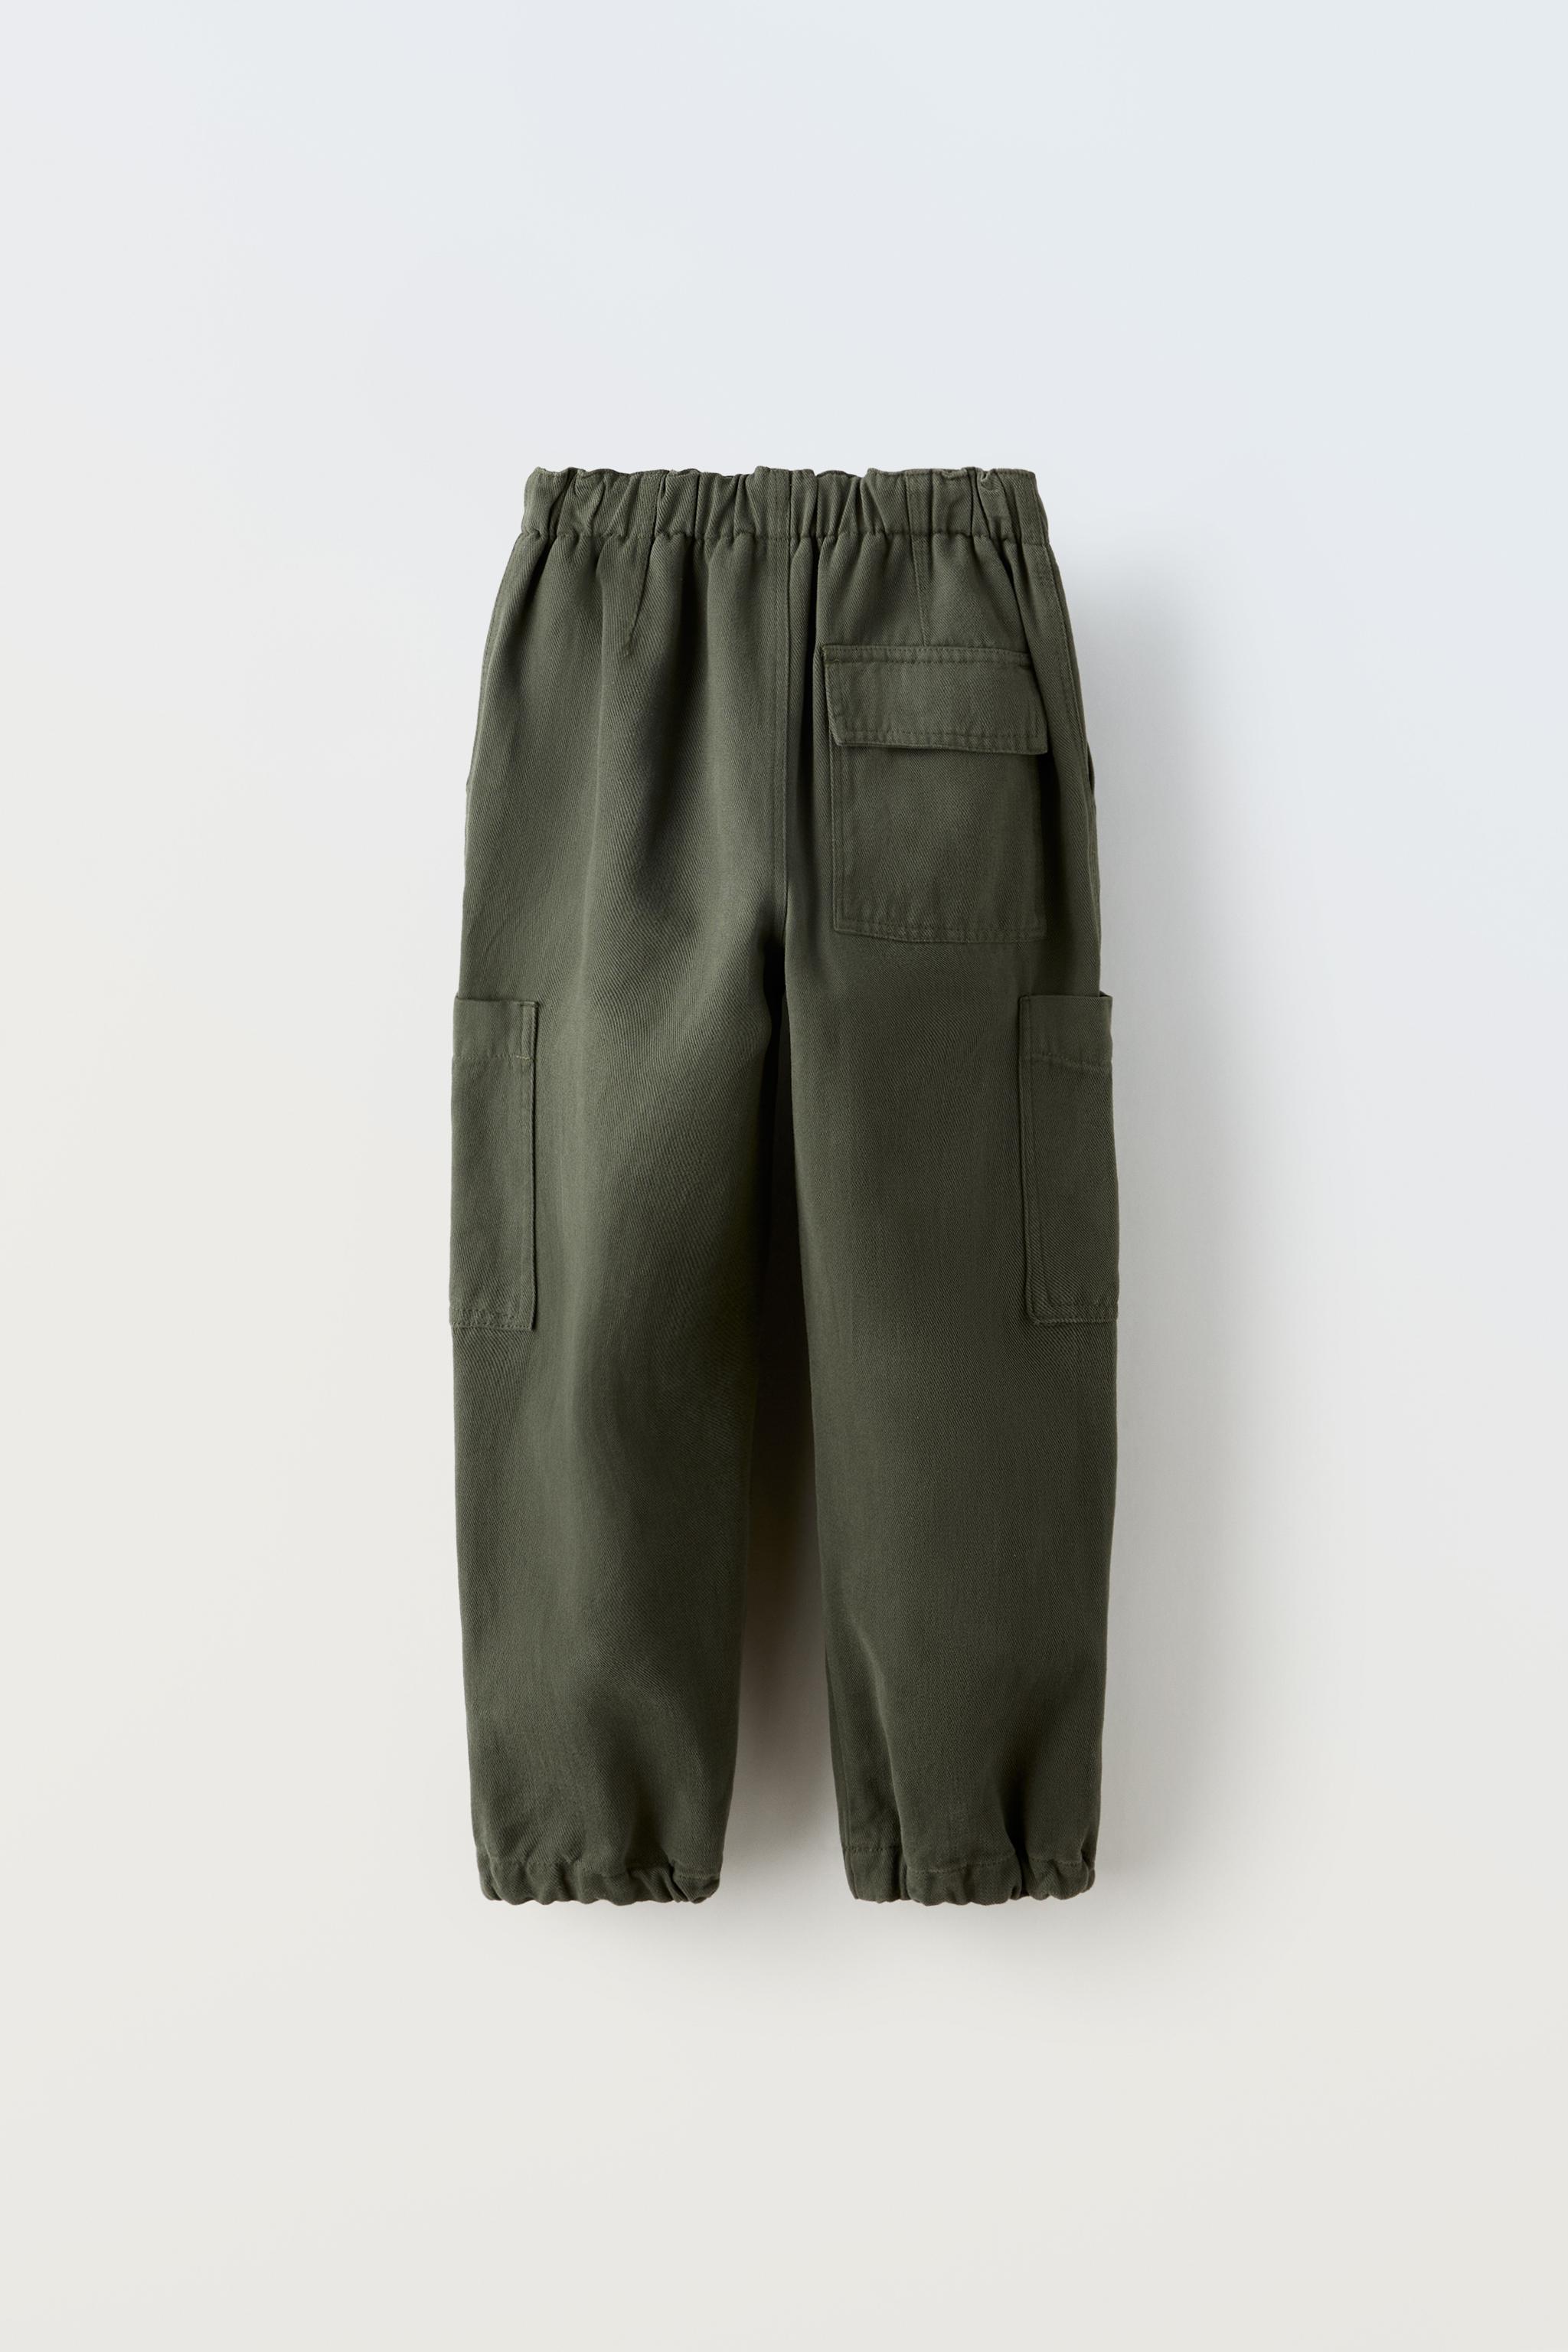 Zara Parachute Cargo Pants Sand New size XL Bloggers Favorite